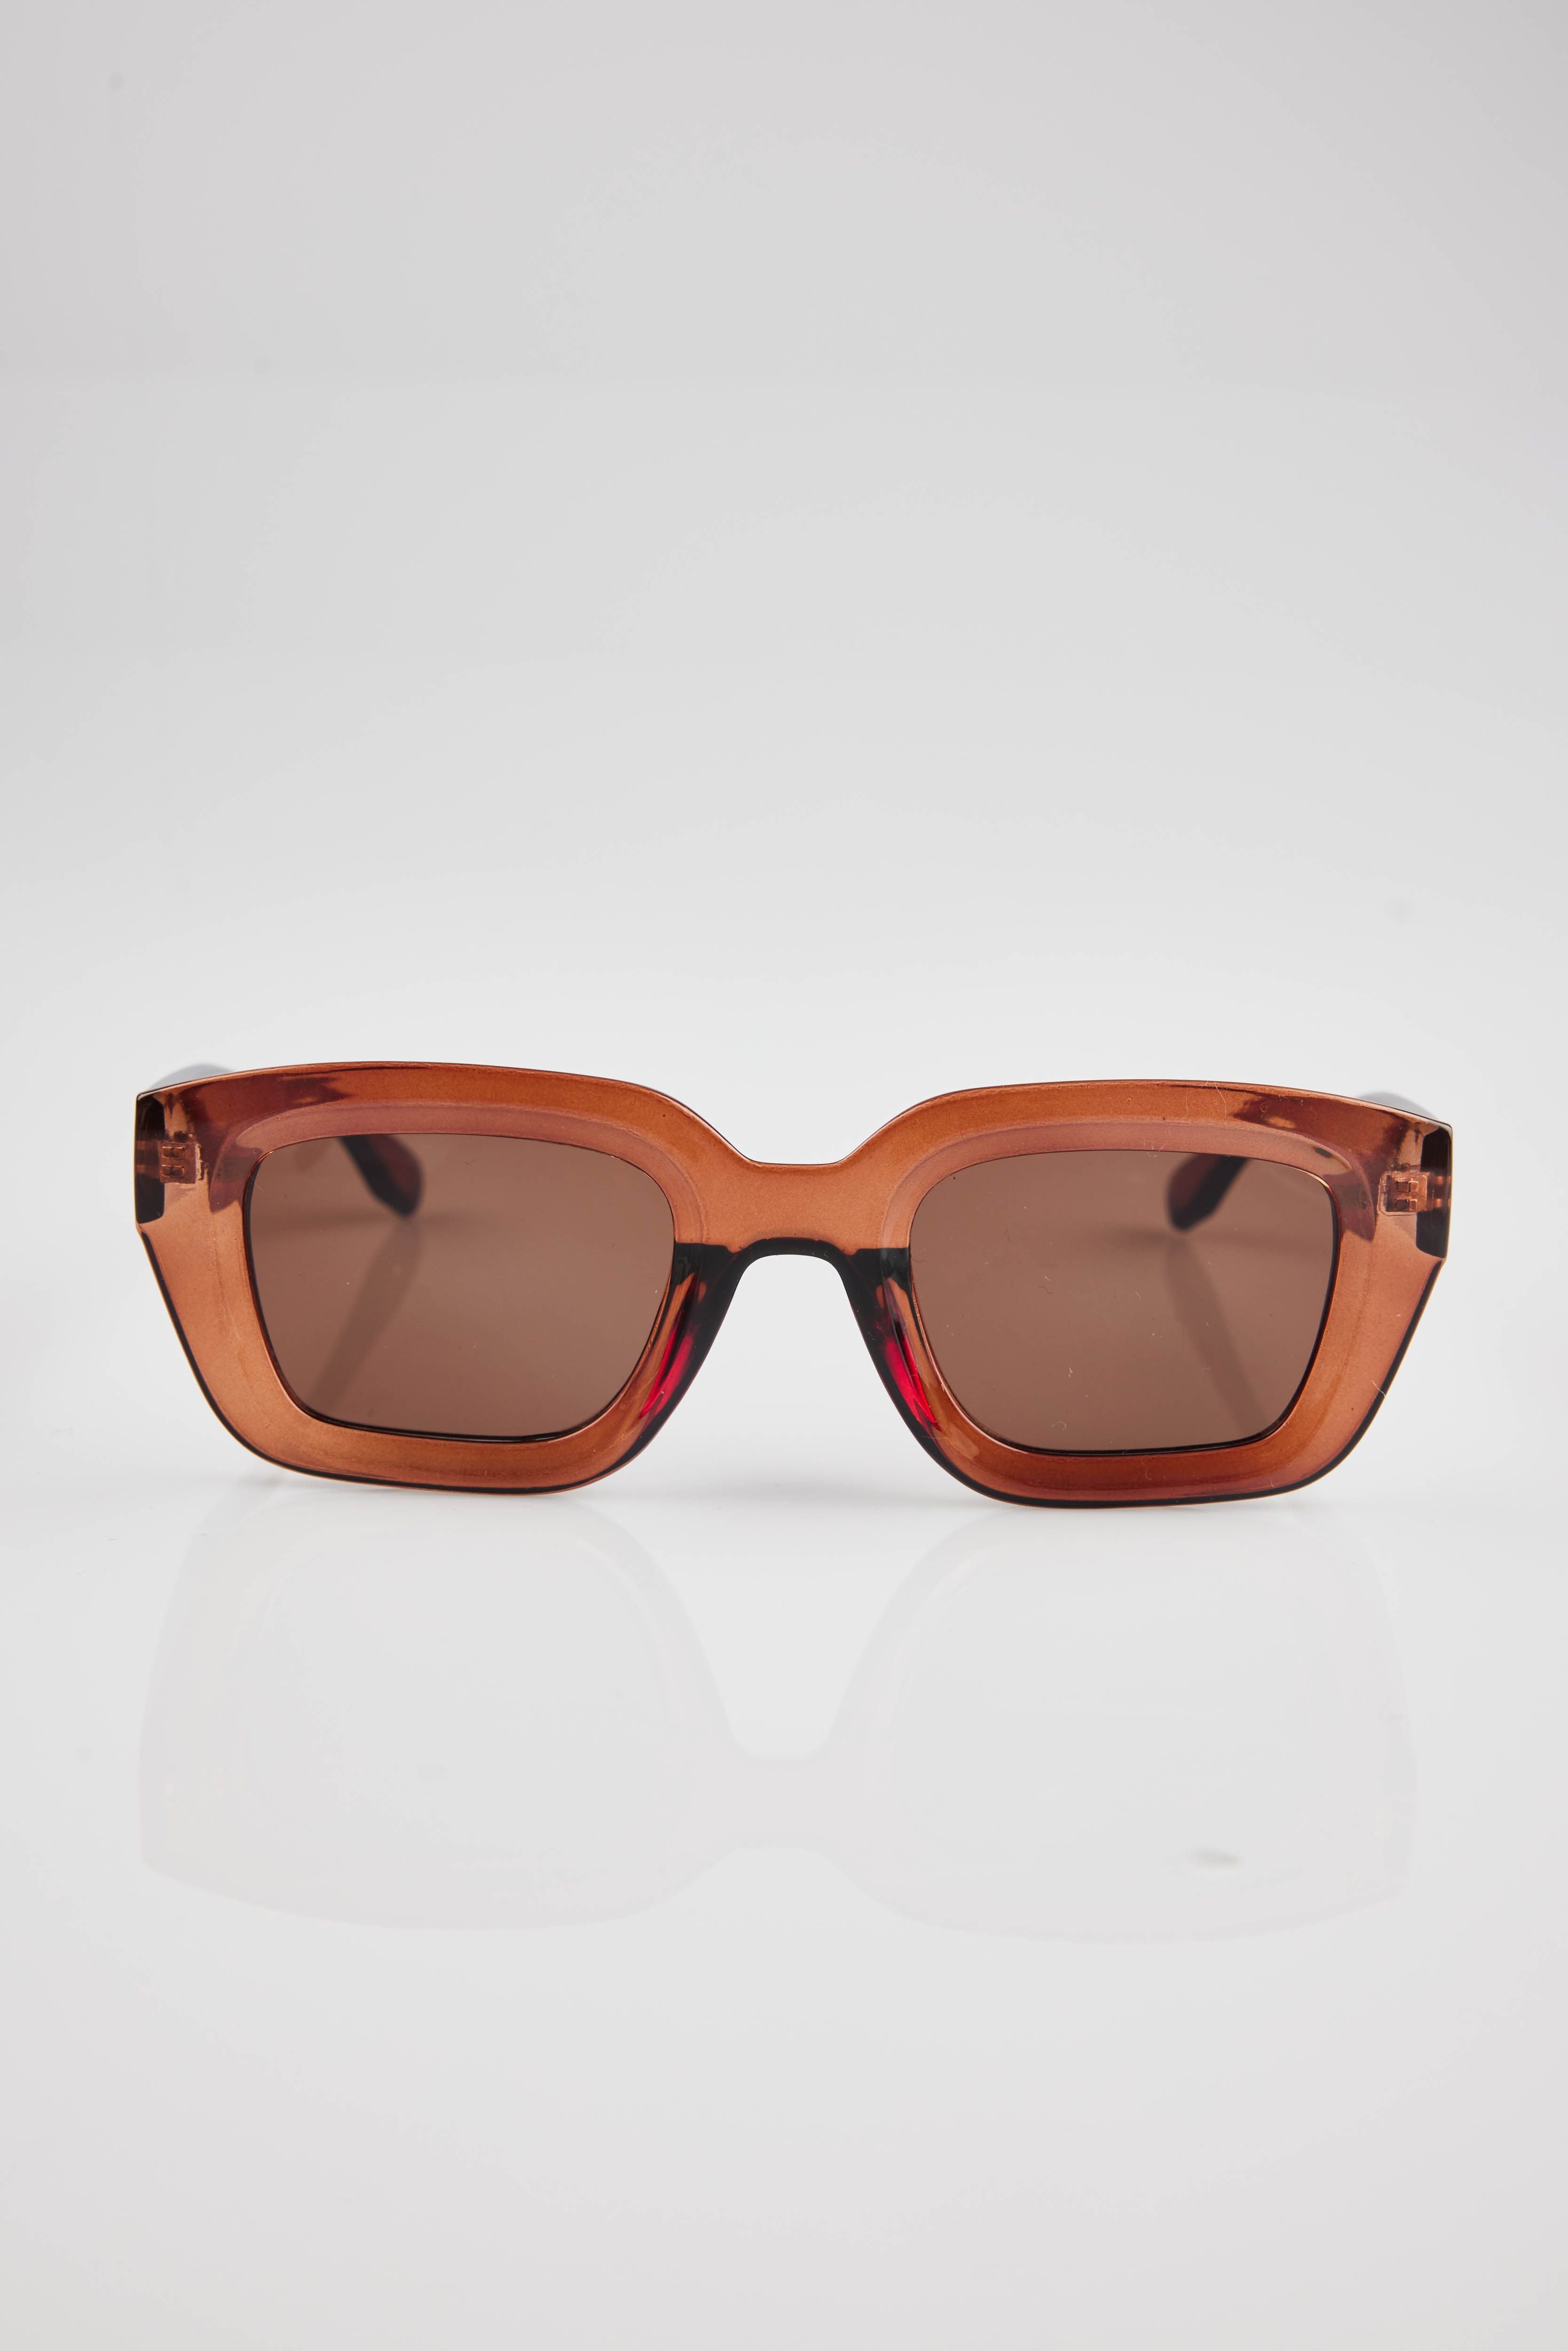 Positano Sunglasses - Brown-Headwear & Sunglasses-Holiday-The Bay Room